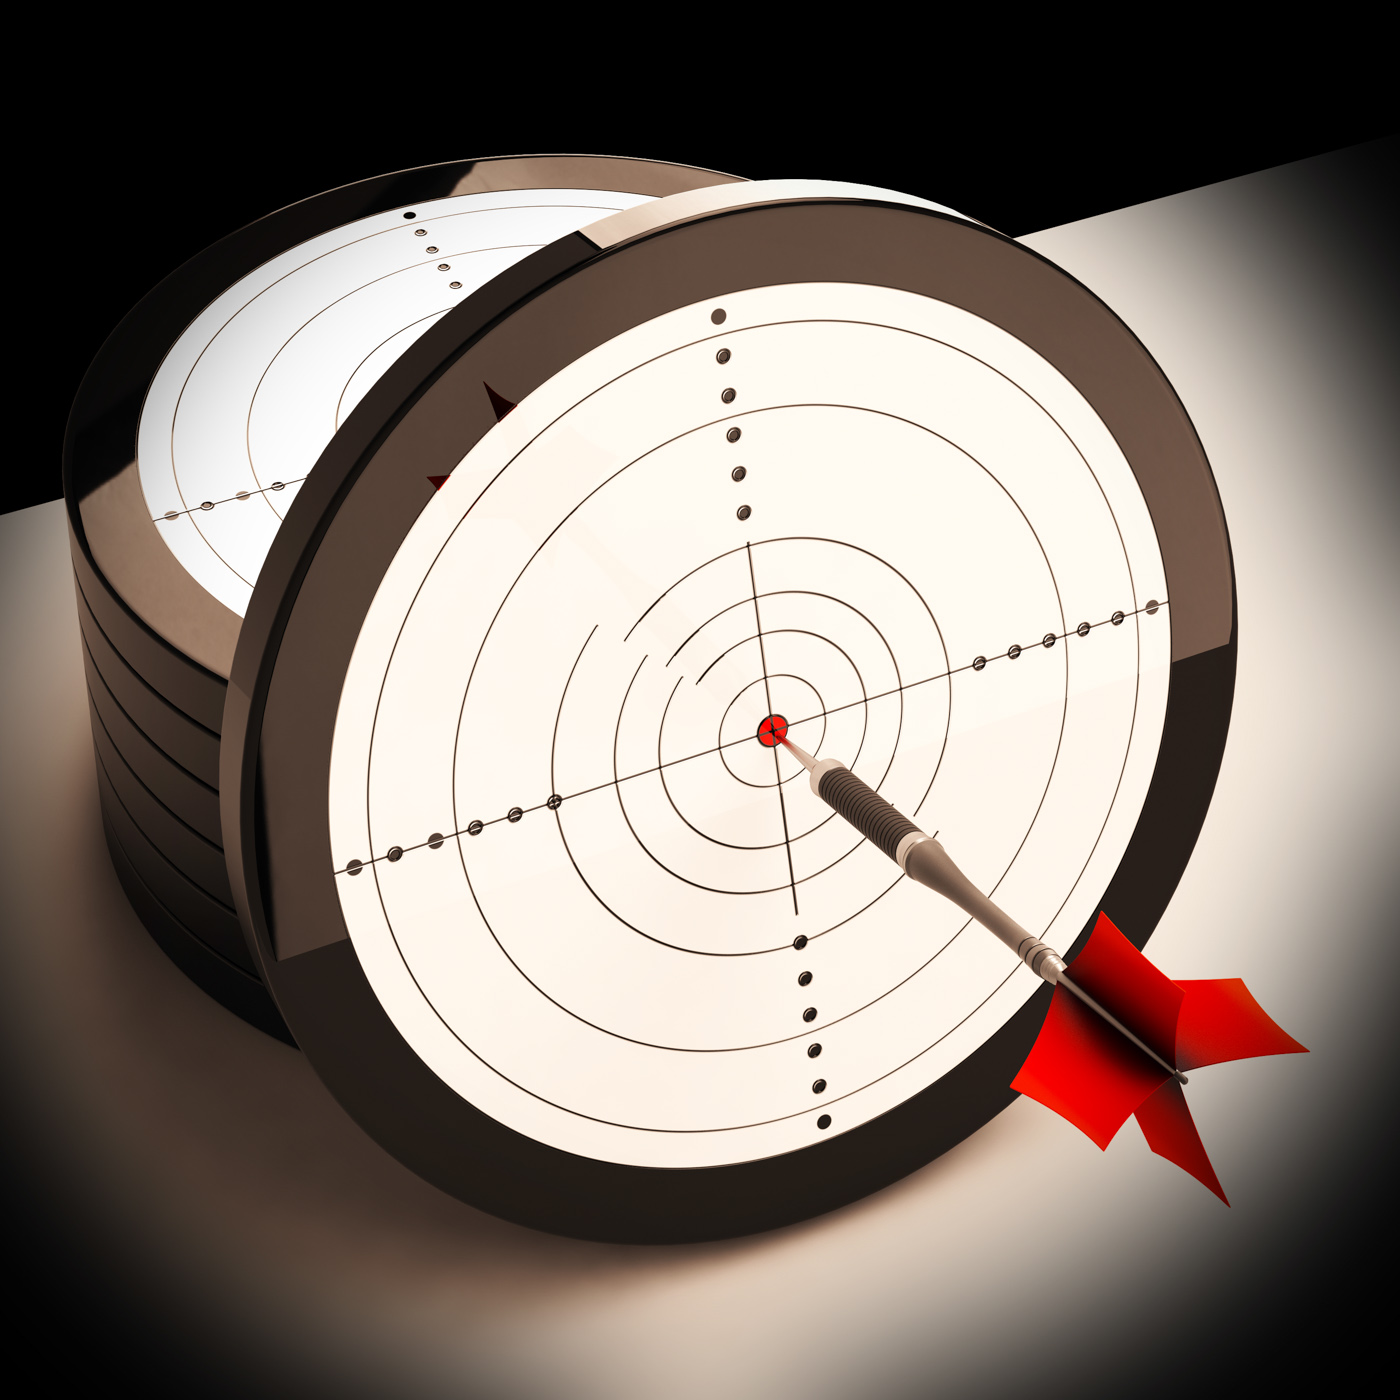 Dart target shows focused successful aim photo